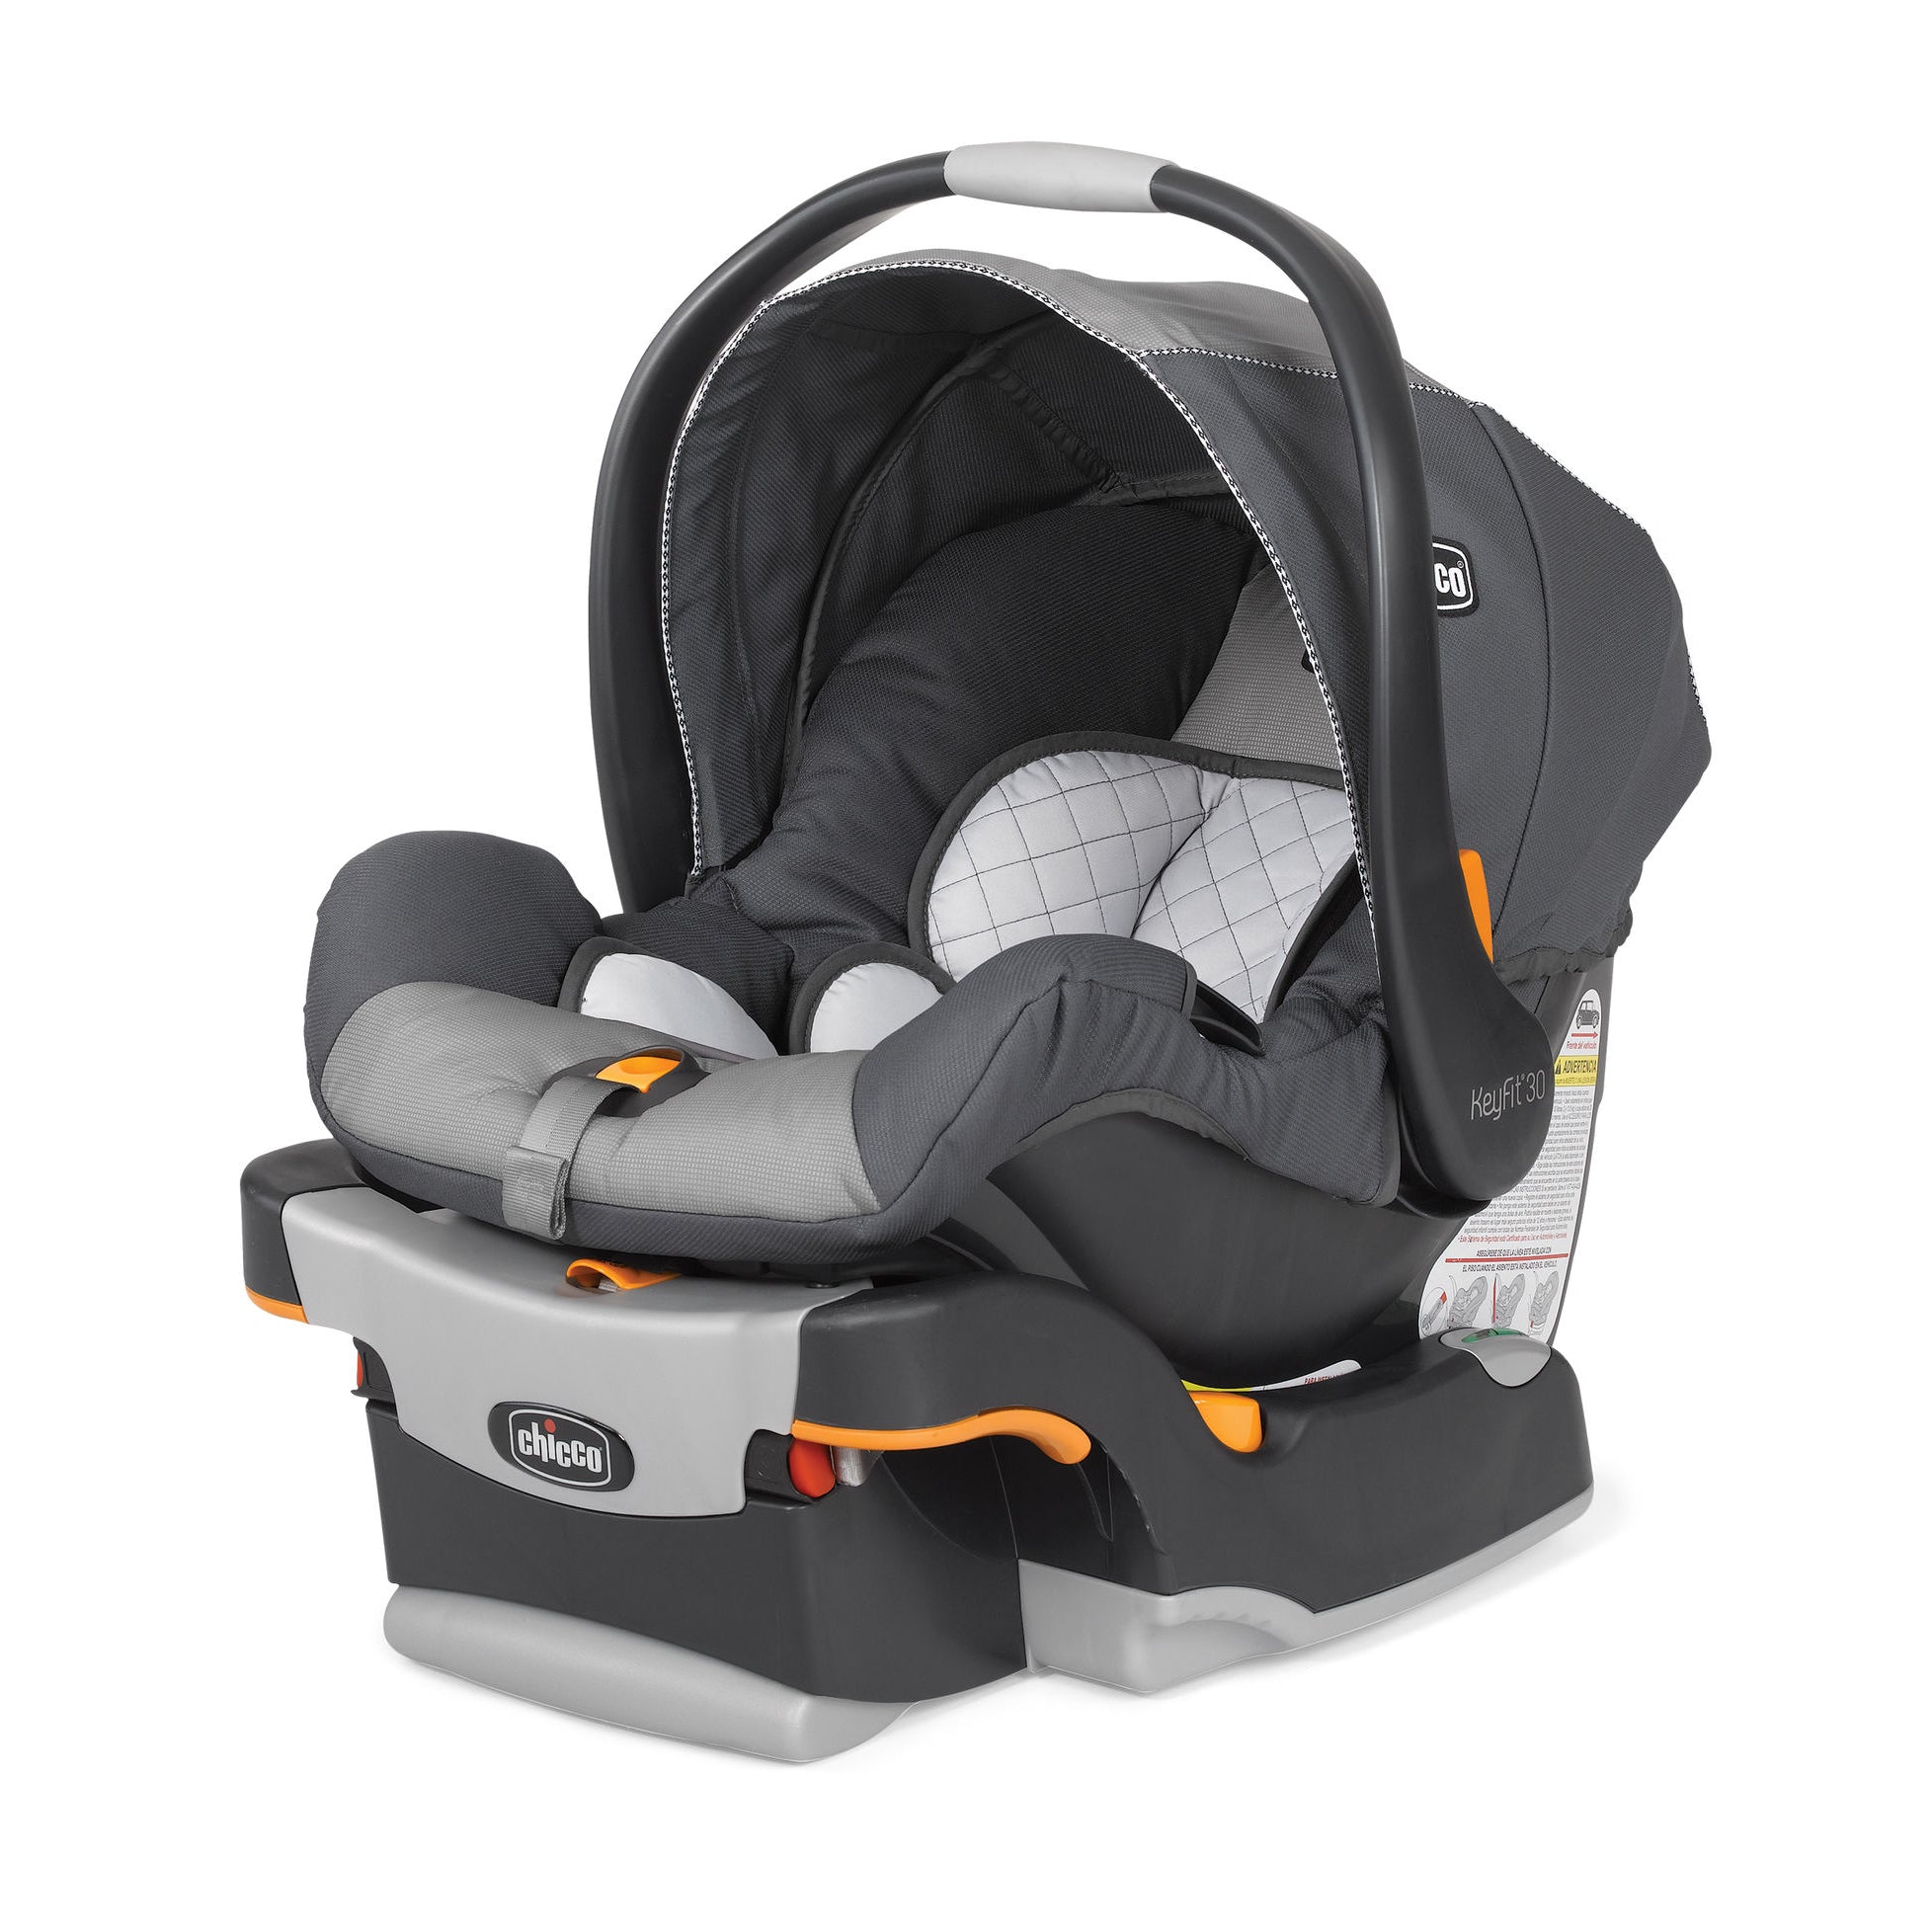 Keyfit 30 Infant Car Seat moonstone